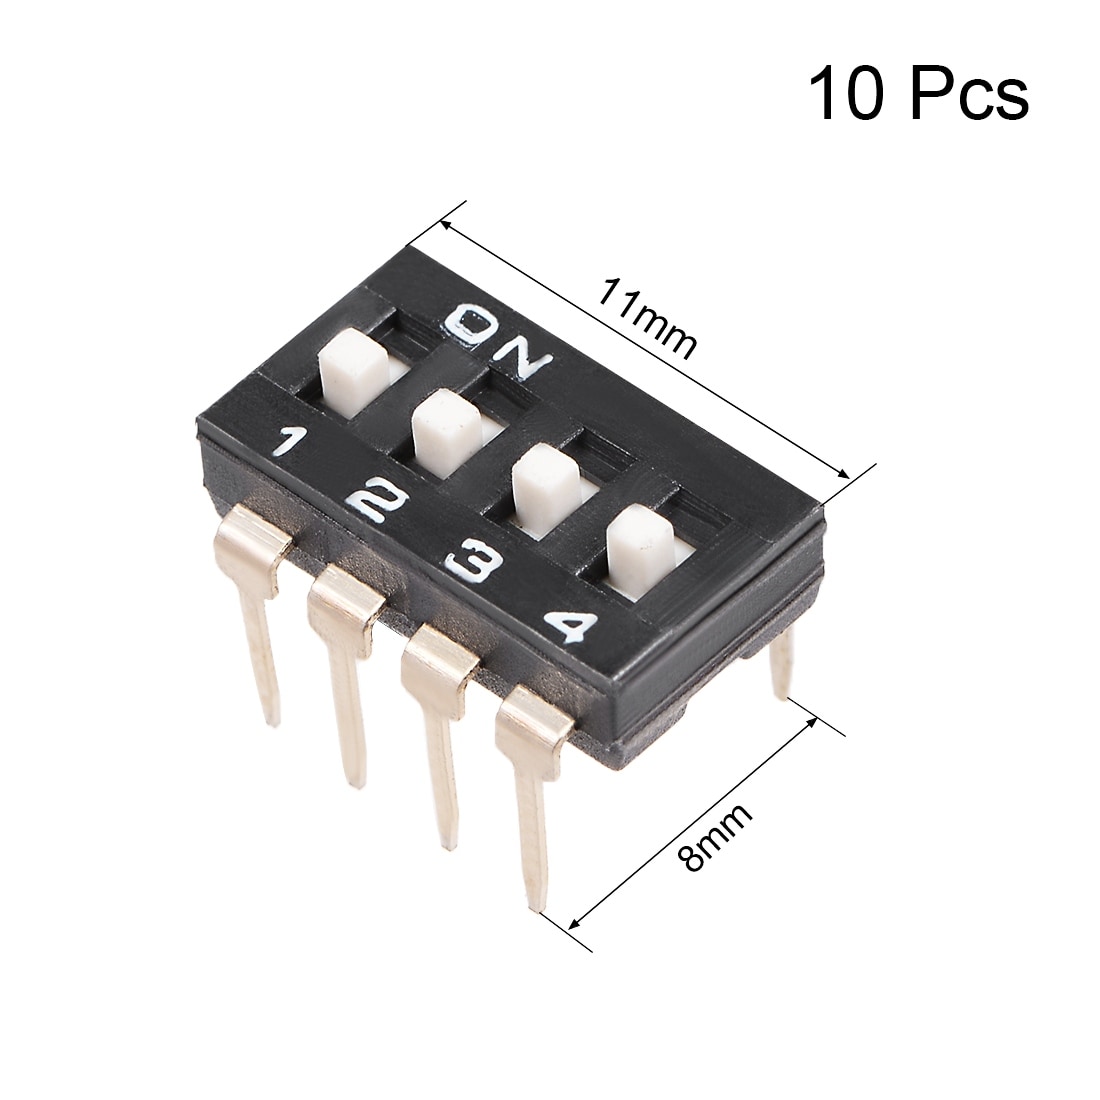 10 Pcs Black DIP Switch 1 2 3 4 Positions 2.54mm Pitch for Circuit PCB - 1-4-10Pcs